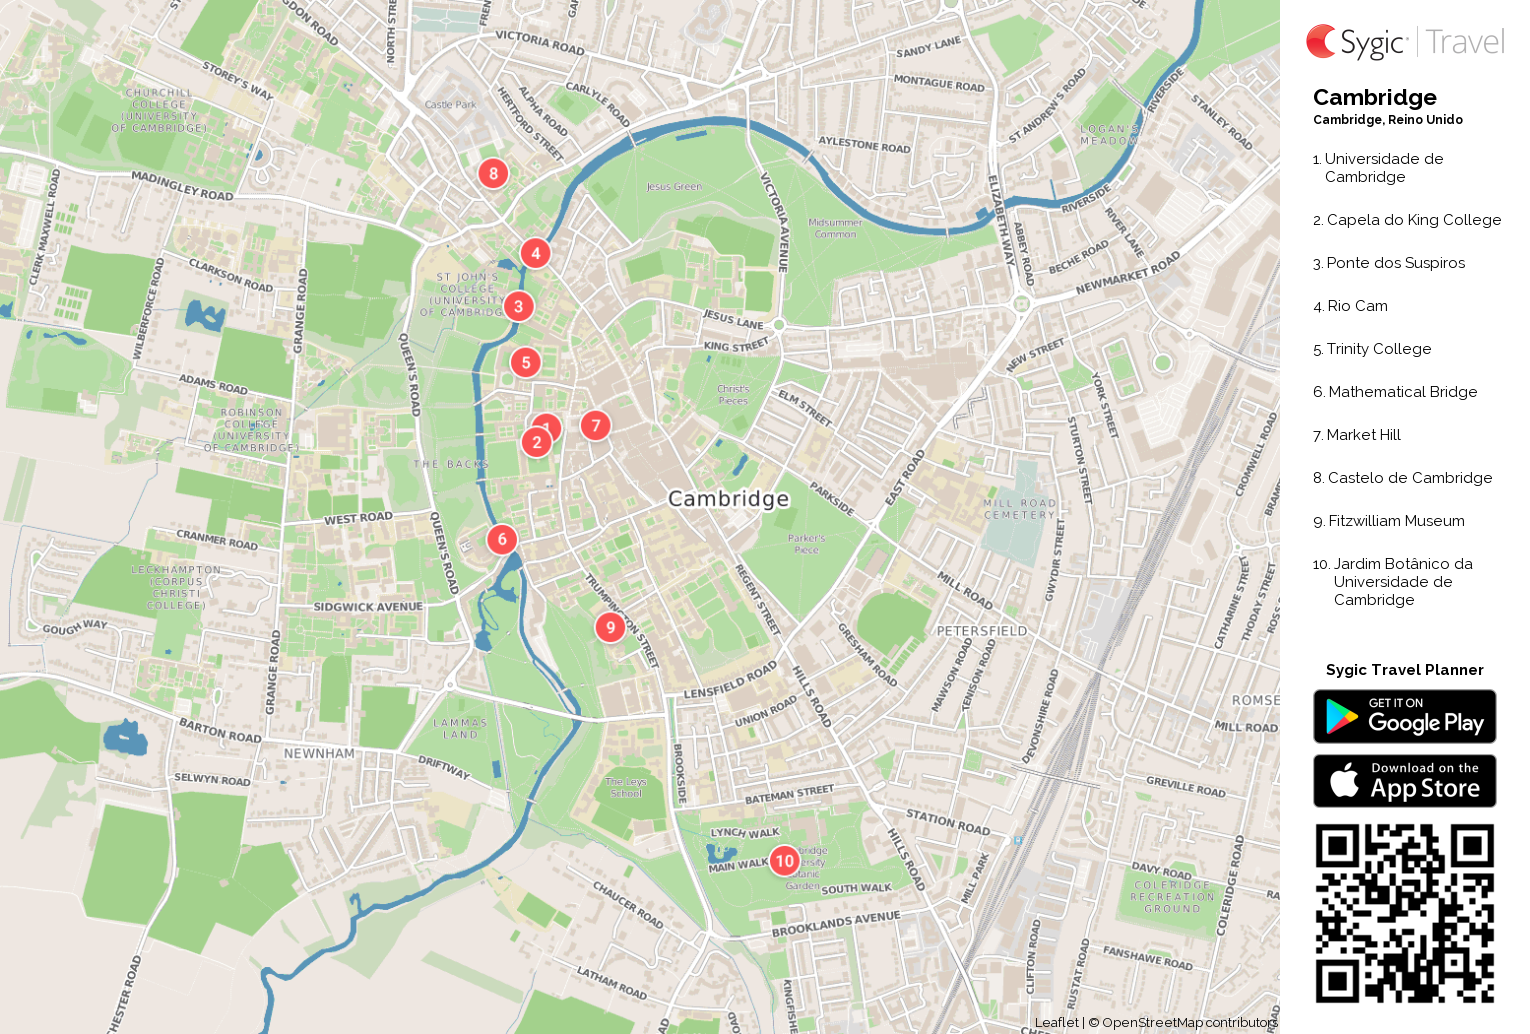 cambridge-mapa-turistico-em-pdf